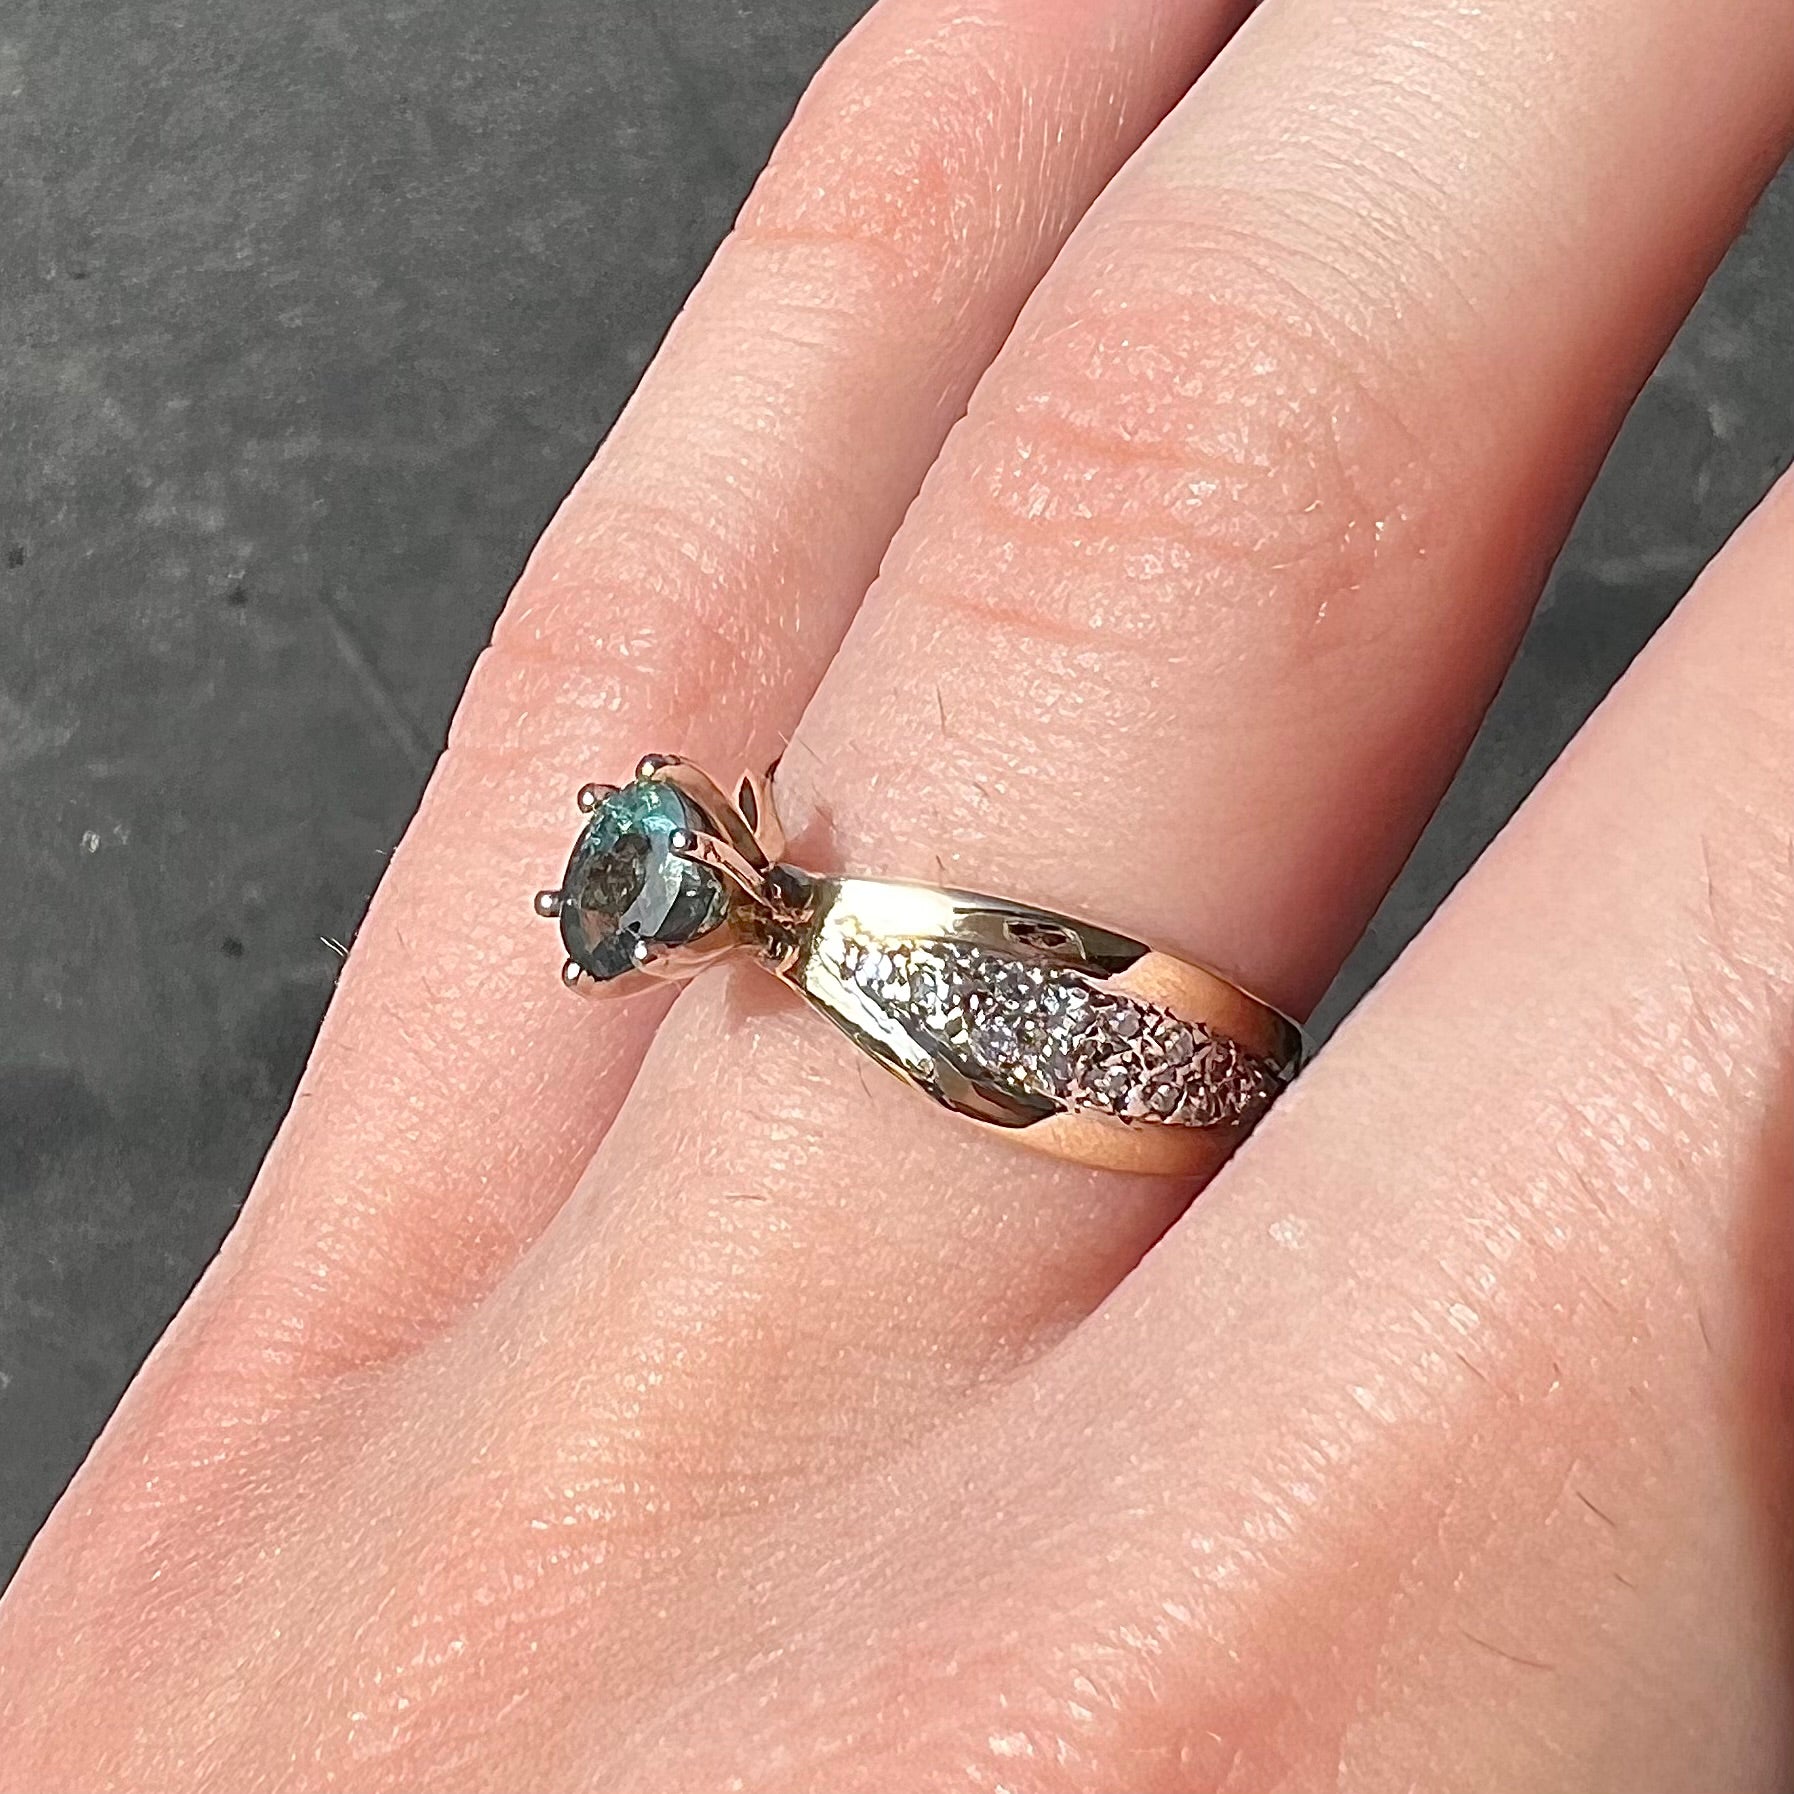 Color Change Alexandrite Engagement Ring w/ Emerald Cut Diamond Accents